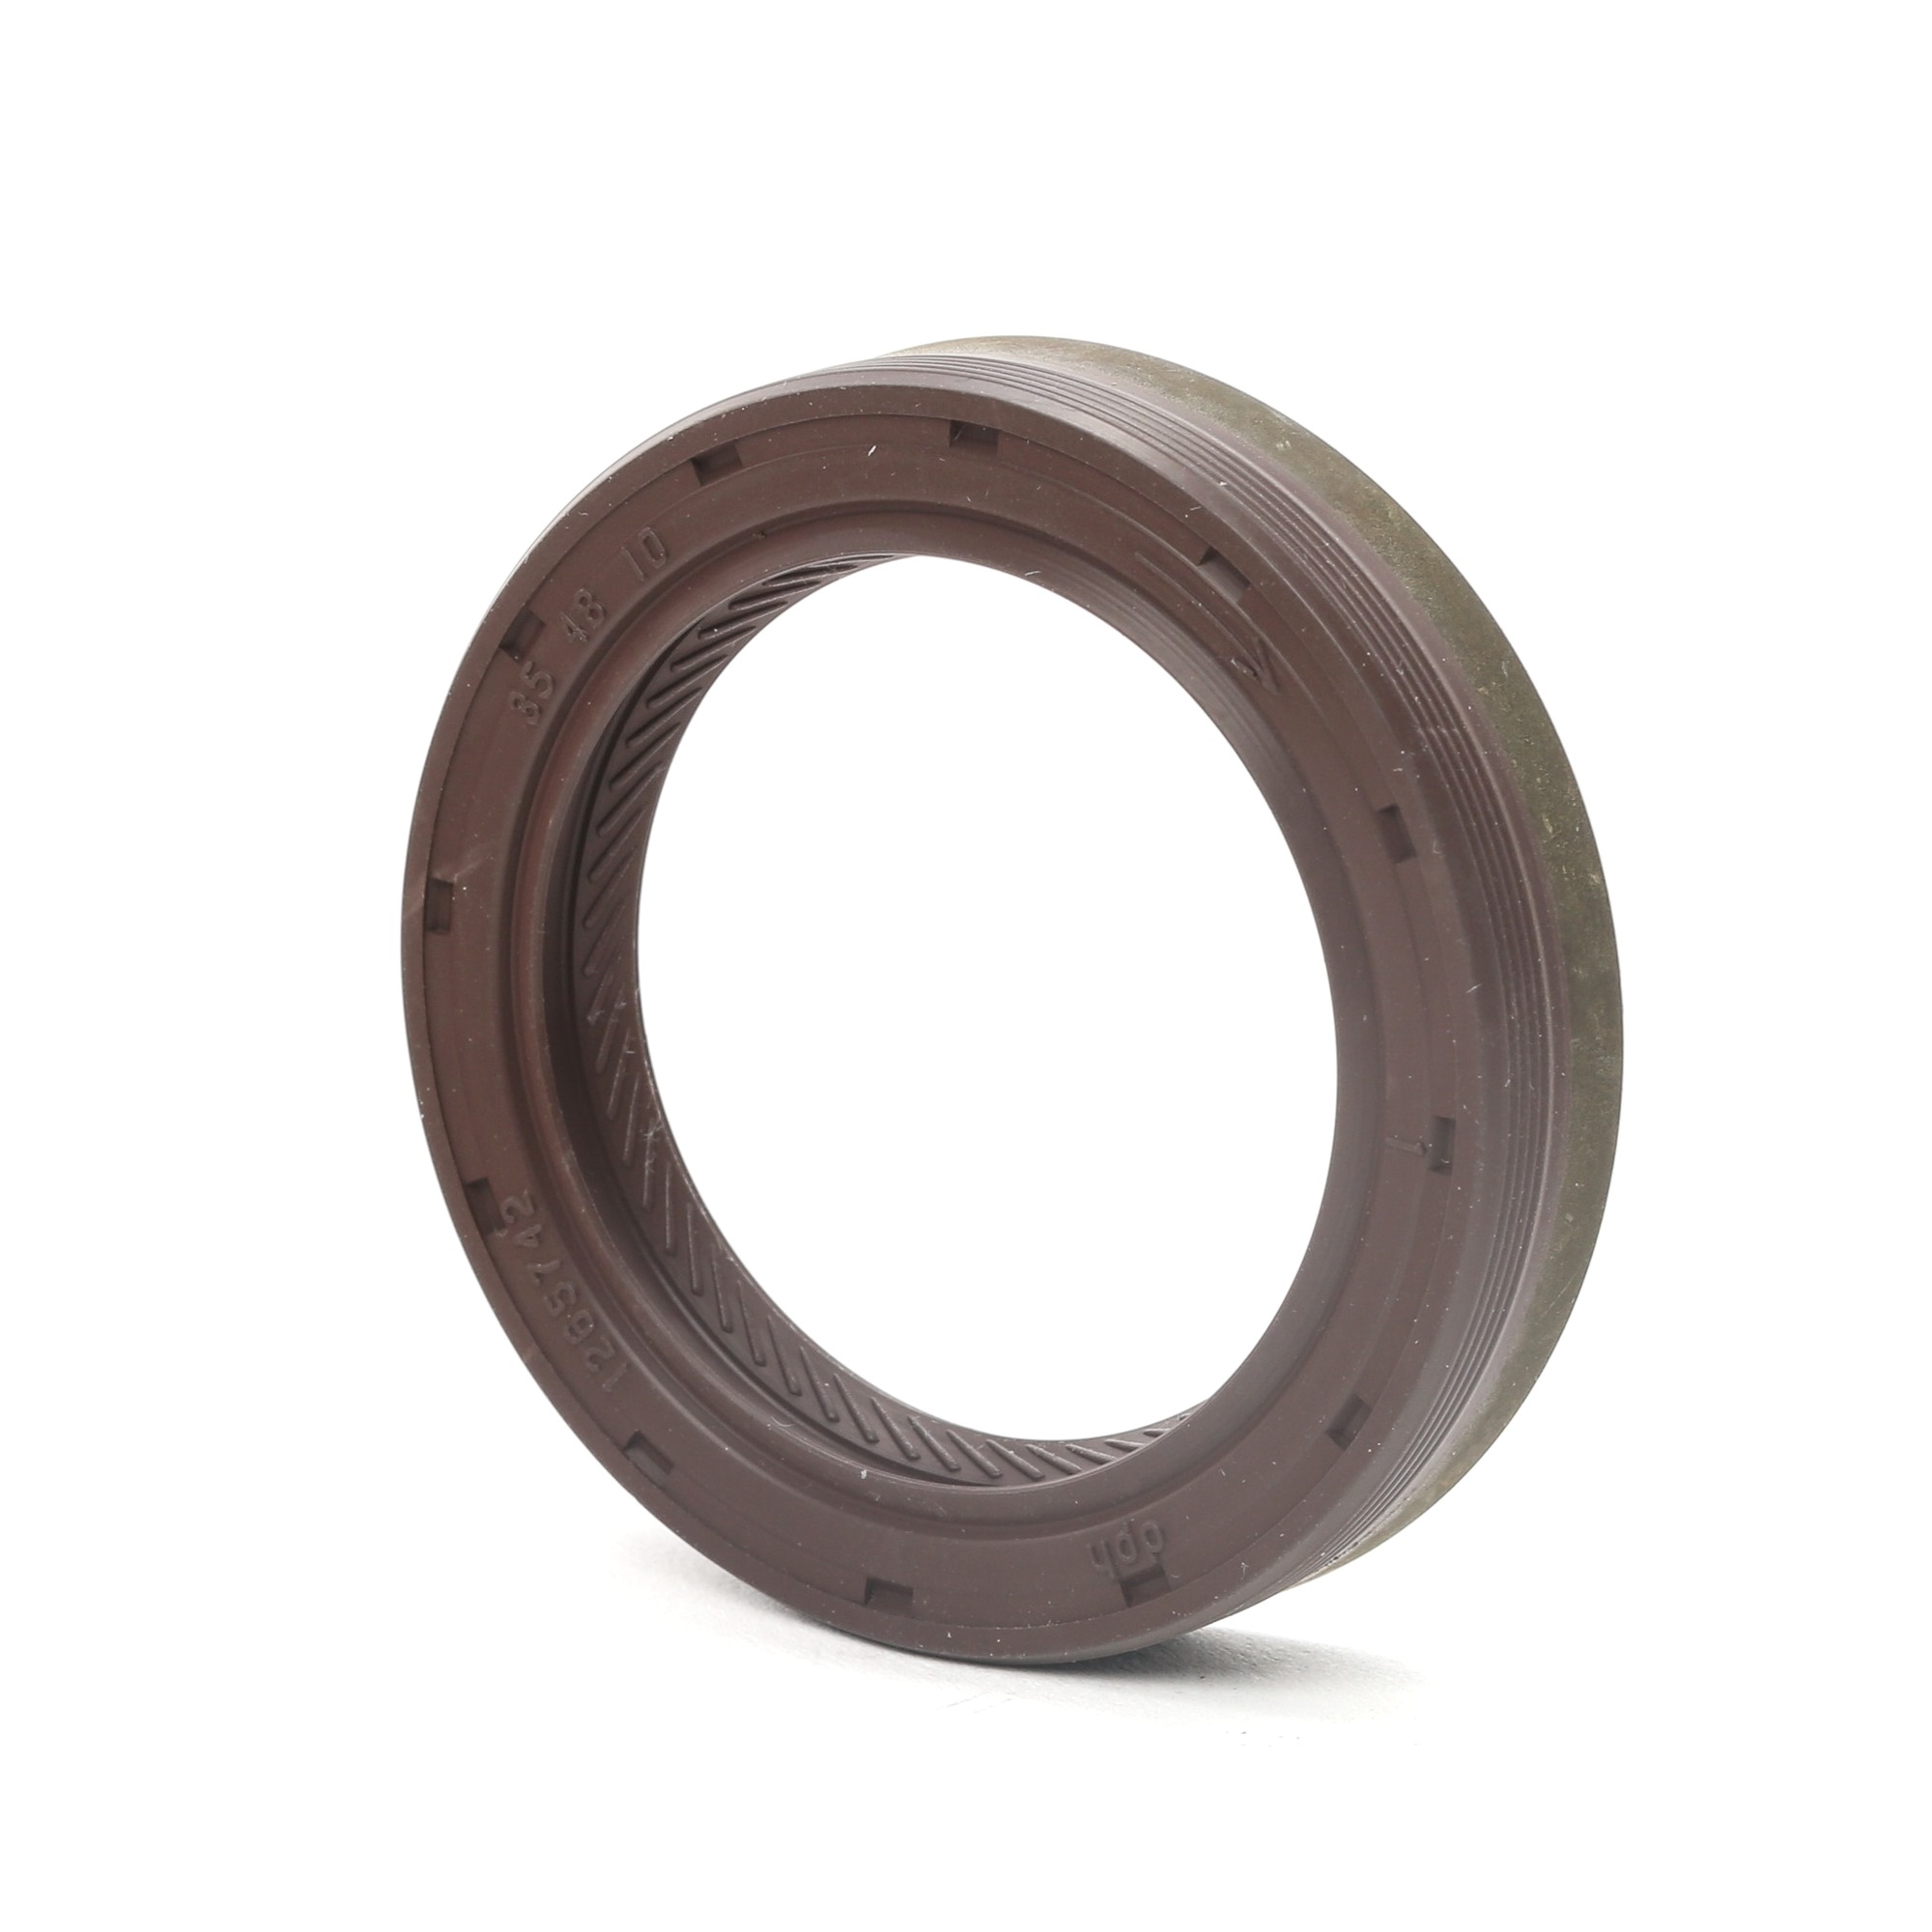 V10-3263 VAICO Crankshaft oil seal DODGE Q+, original equipment manufacturer quality, frontal sided, FPM (fluoride rubber)